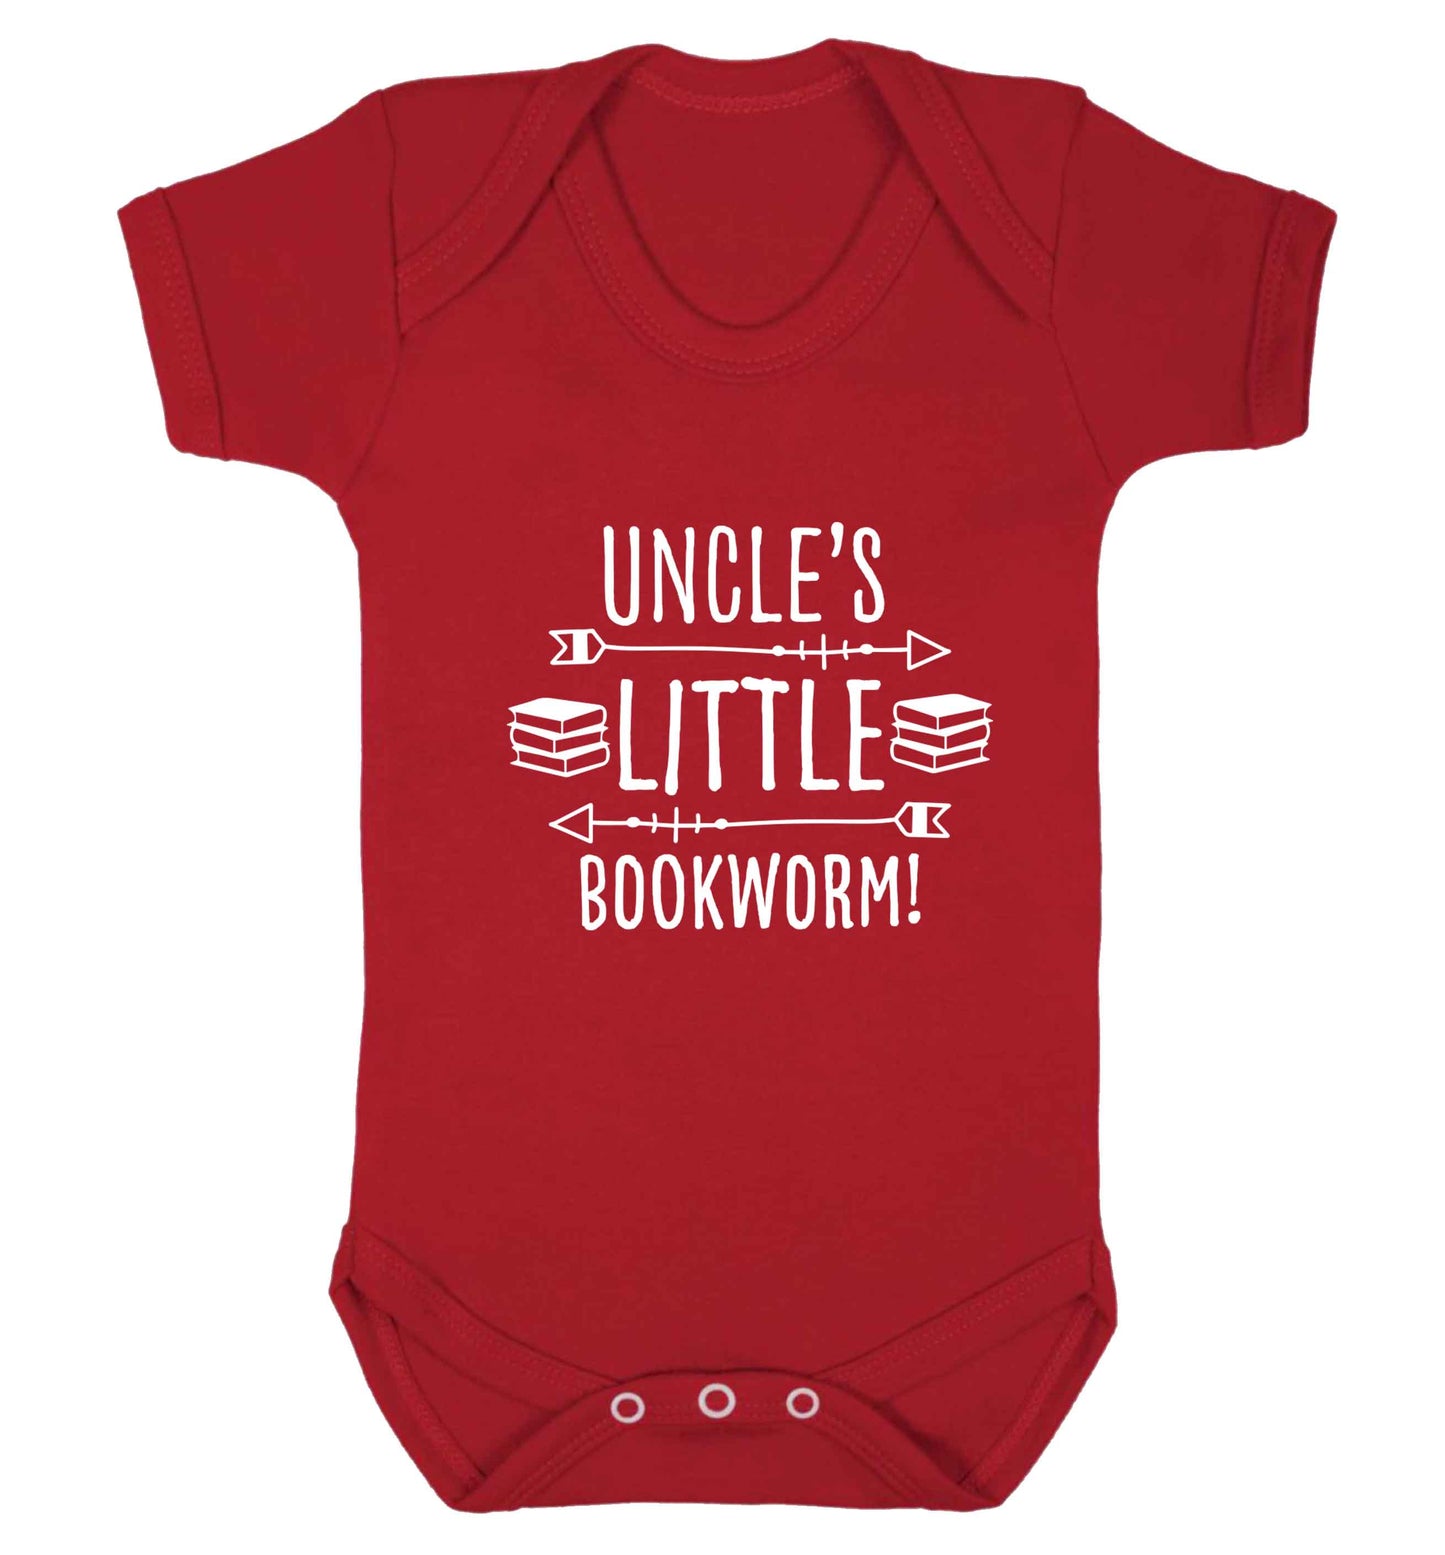 Uncle's little bookworm baby vest red 18-24 months